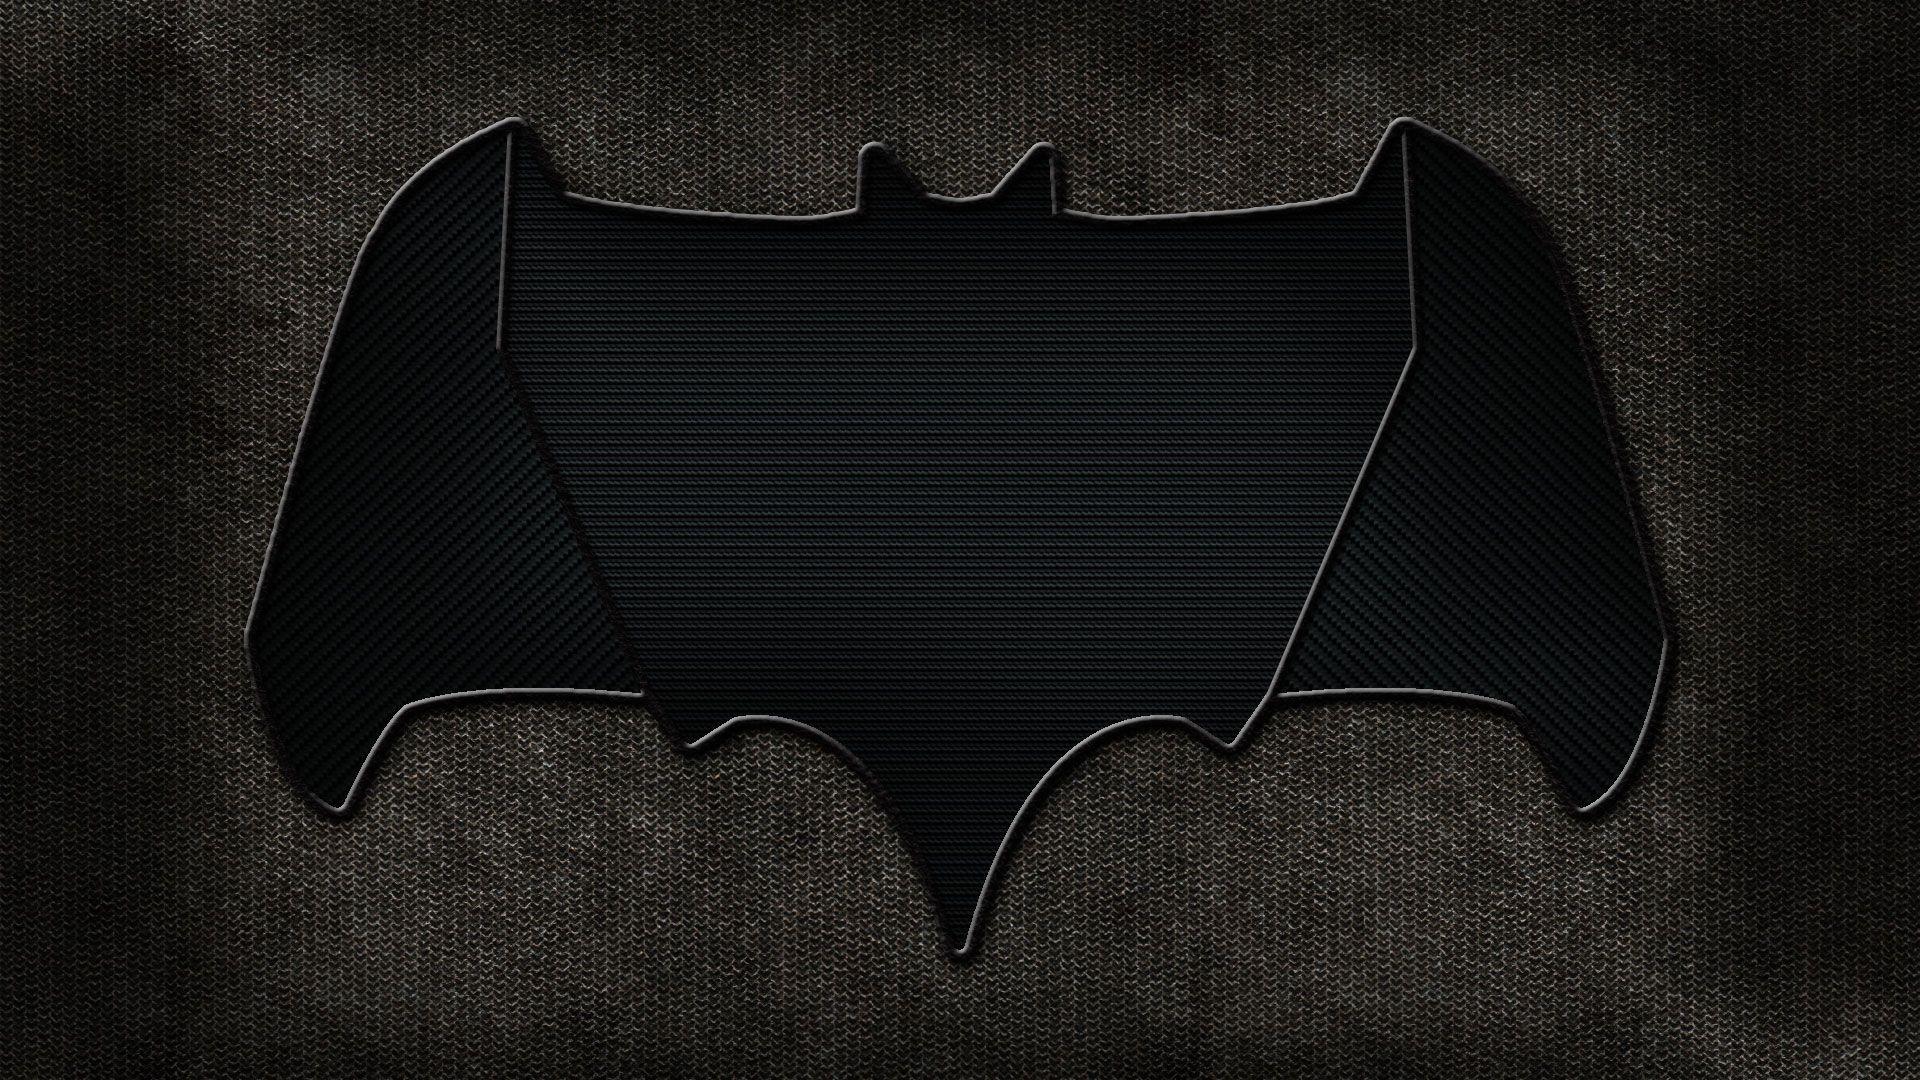 New Bat Logo - New Batman Symbol Group with items